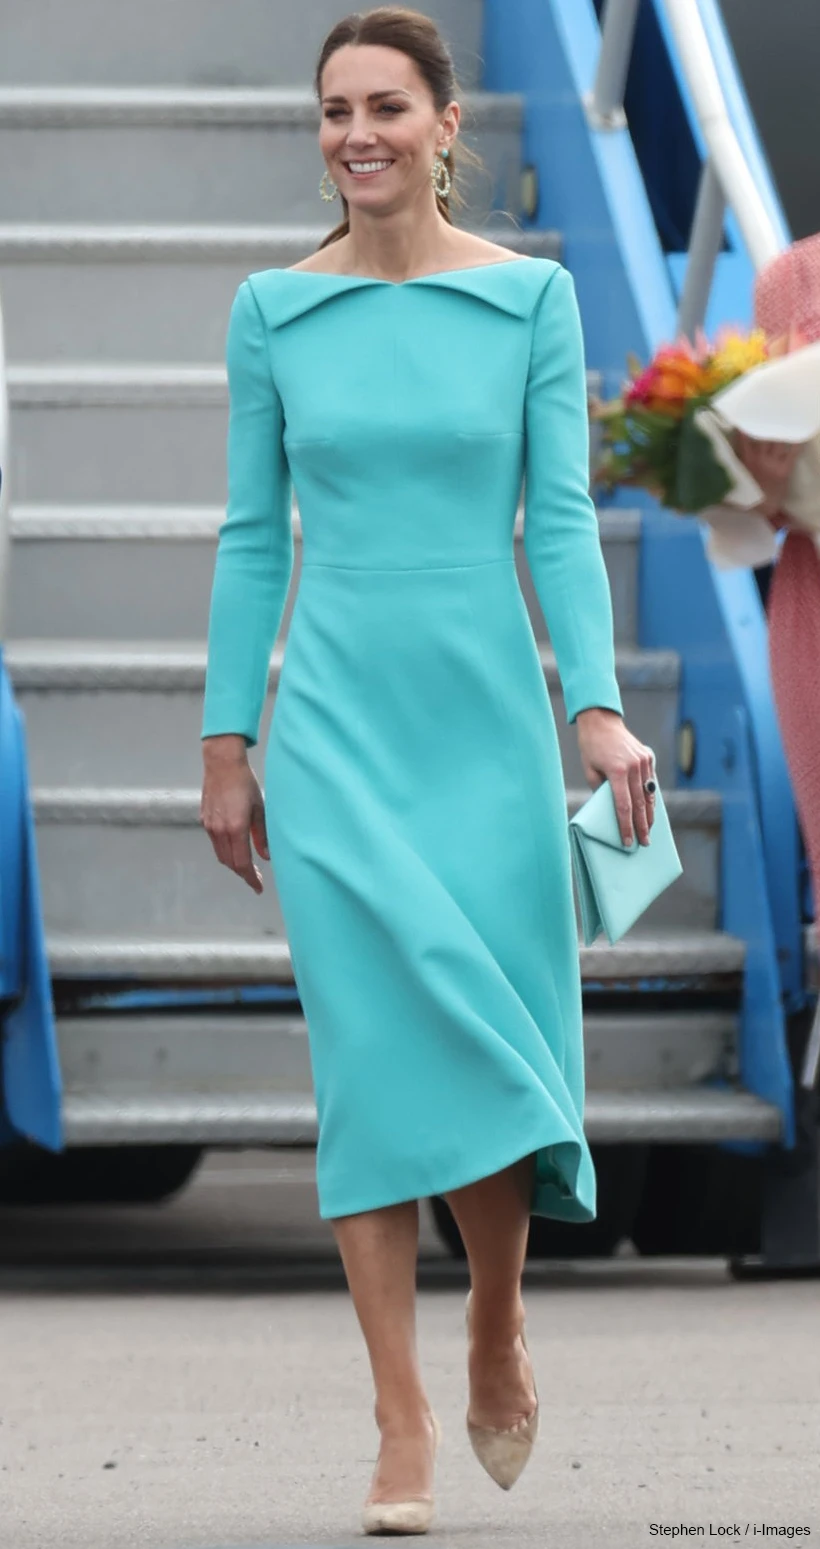 Kate Middleton's Aquamarine/Blue Dress in the Bahamas is by Emilia